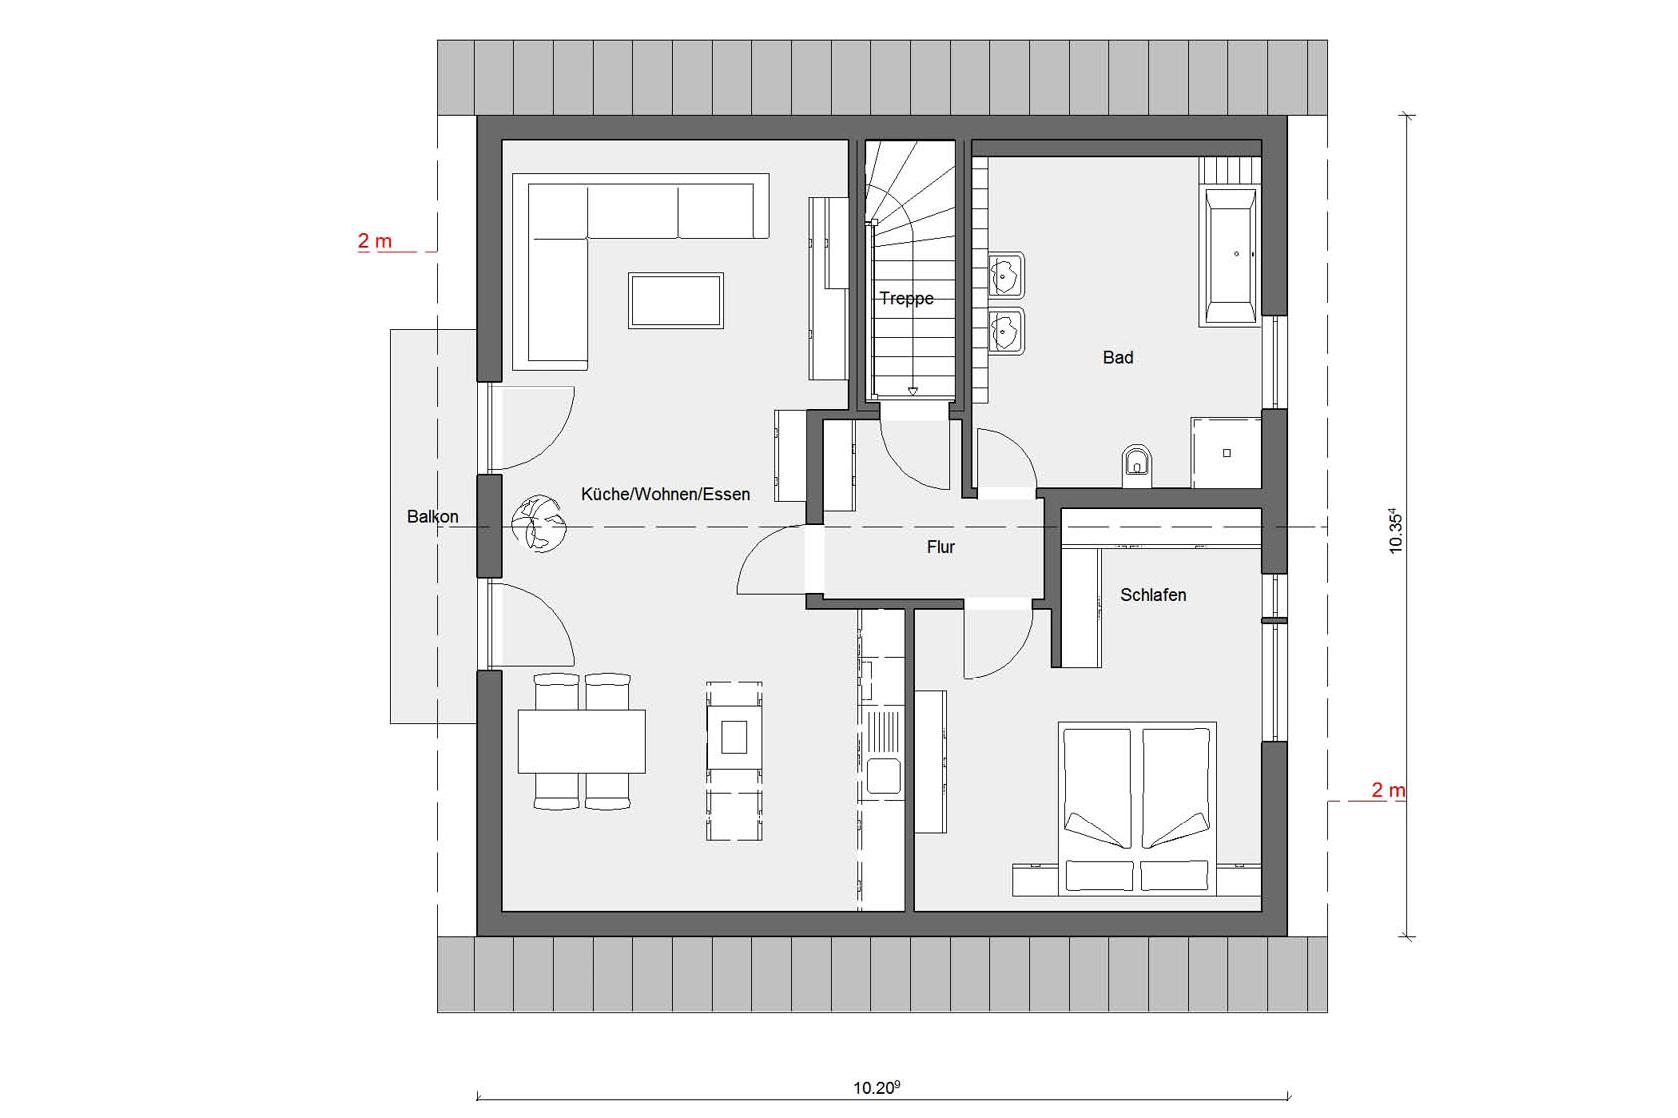 Floor plan penthouse M 15-179.2 Detached house with studio flat